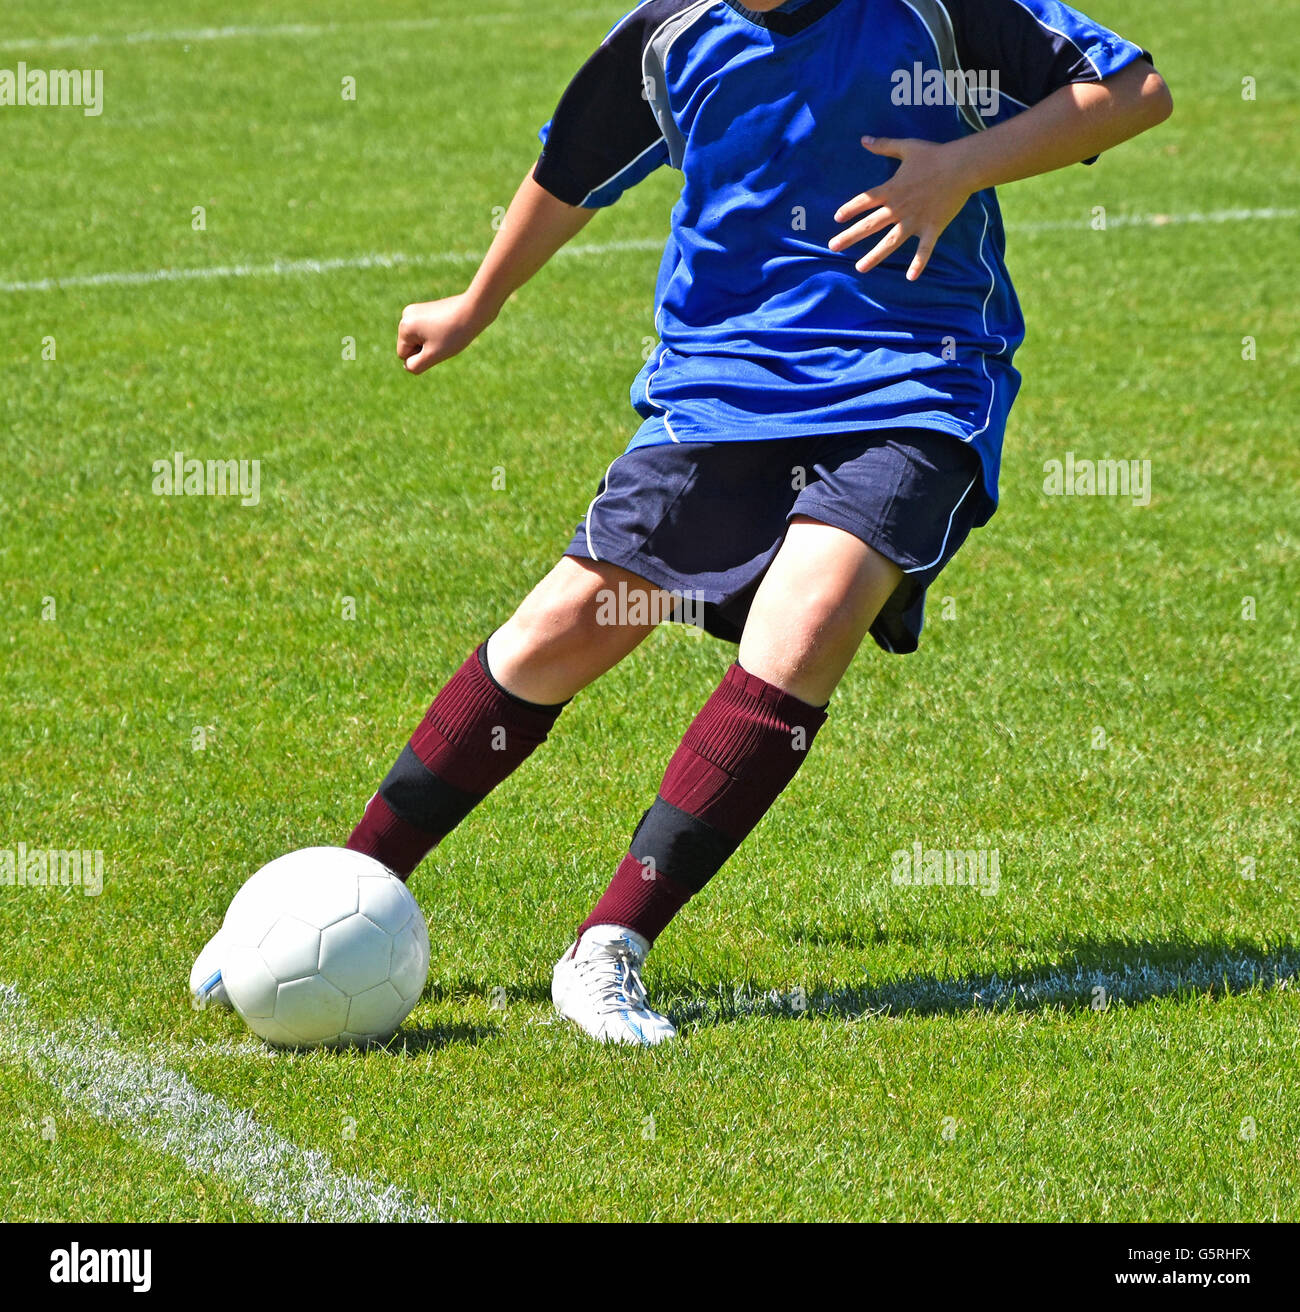 Young child kicks the ball Stock Photo